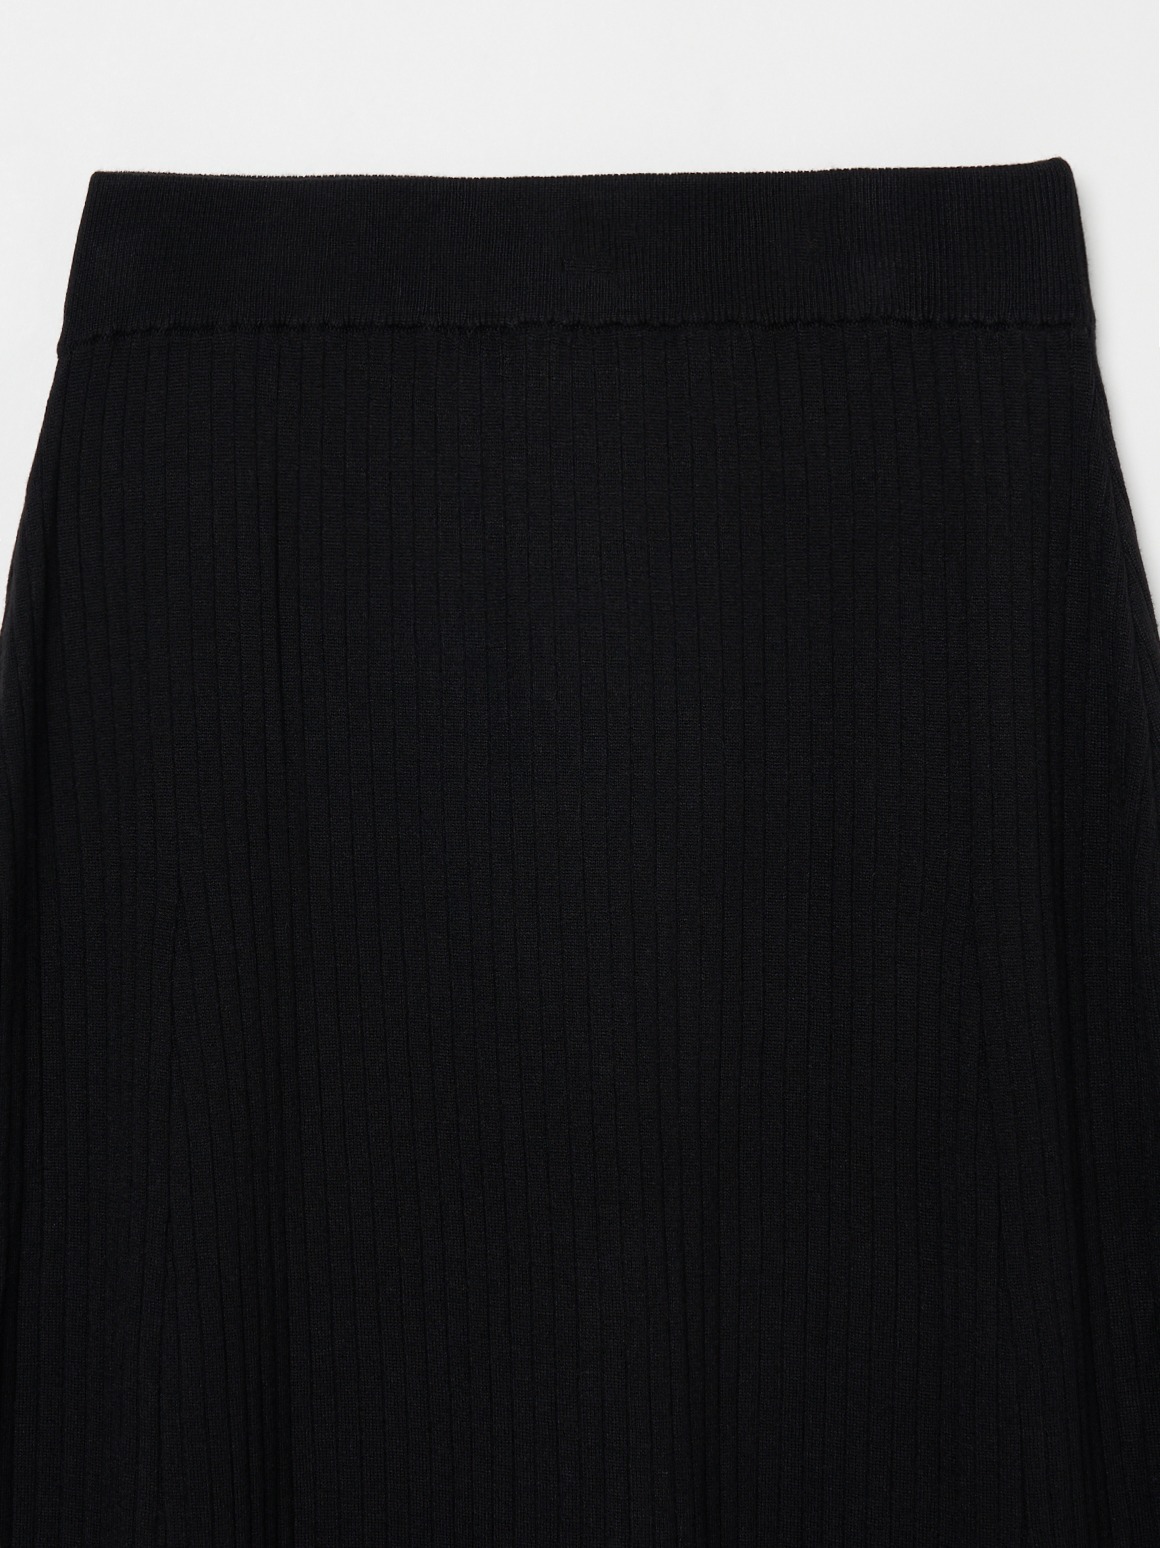 Moist rib A-line skirt 詳細画像 black 2